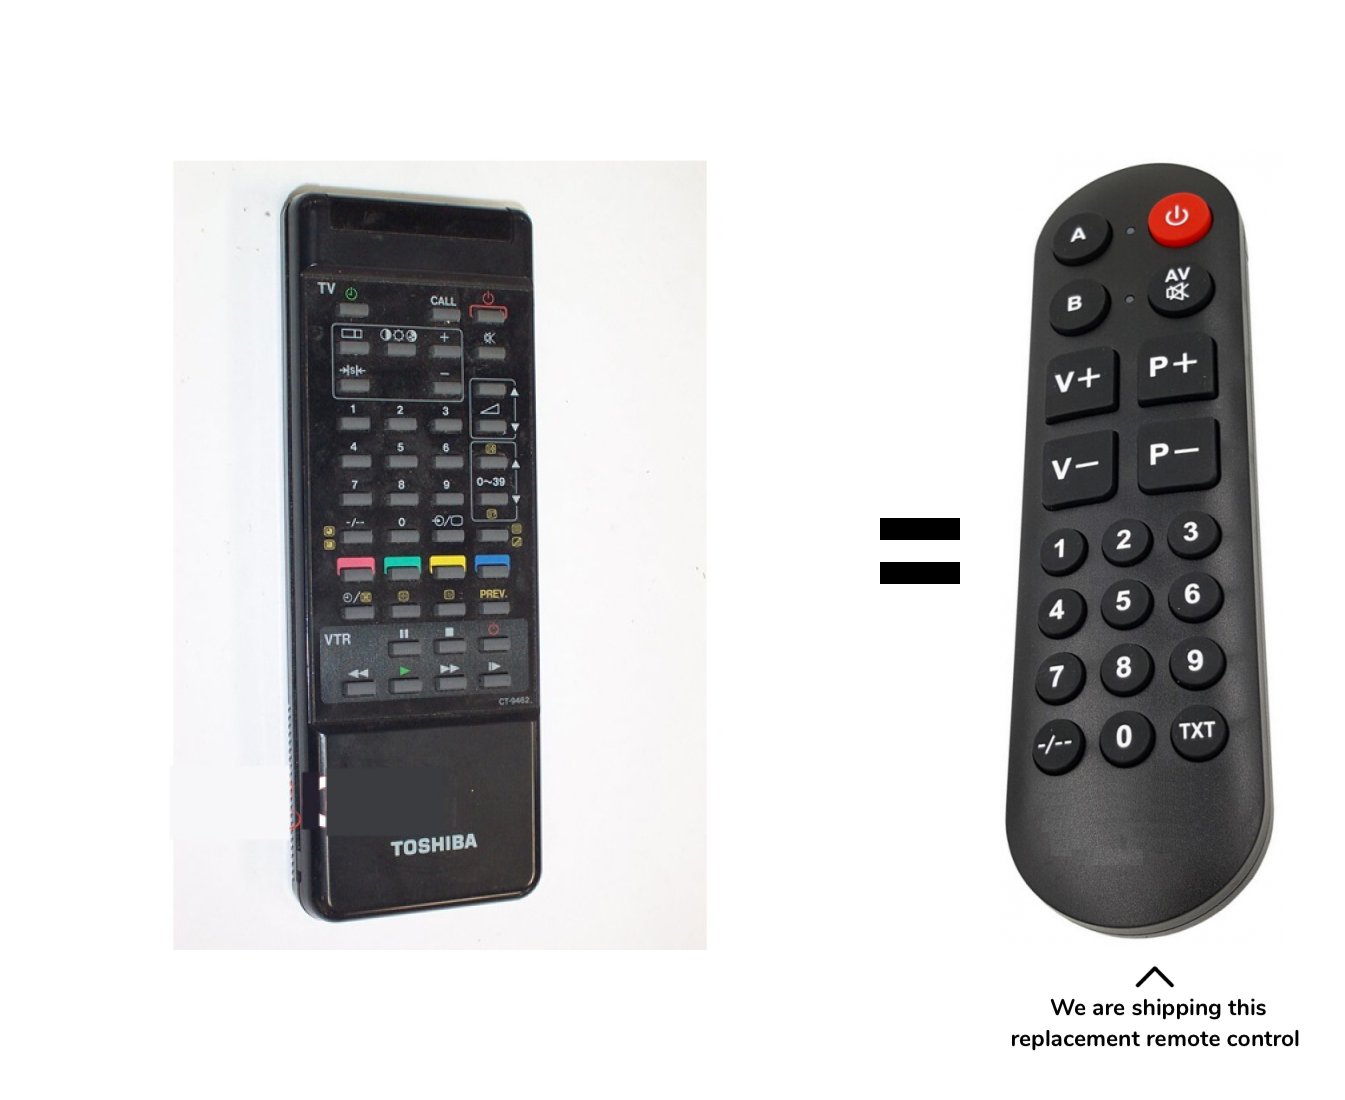 Toshiba CT-9294 remote control for seniors